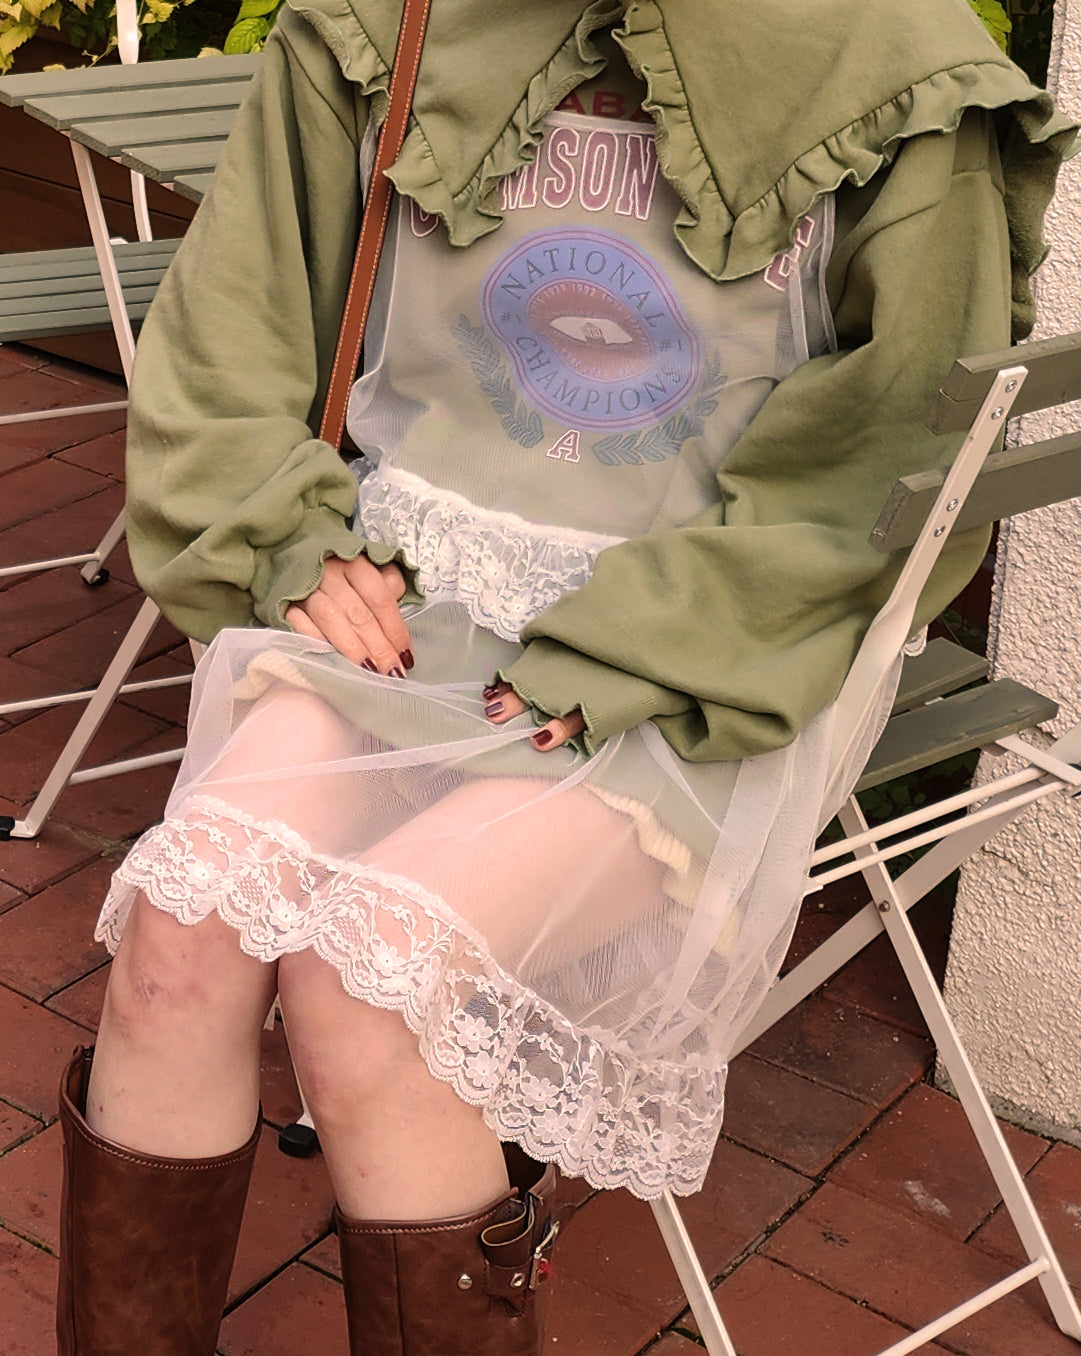 sheer lace frill mini dress